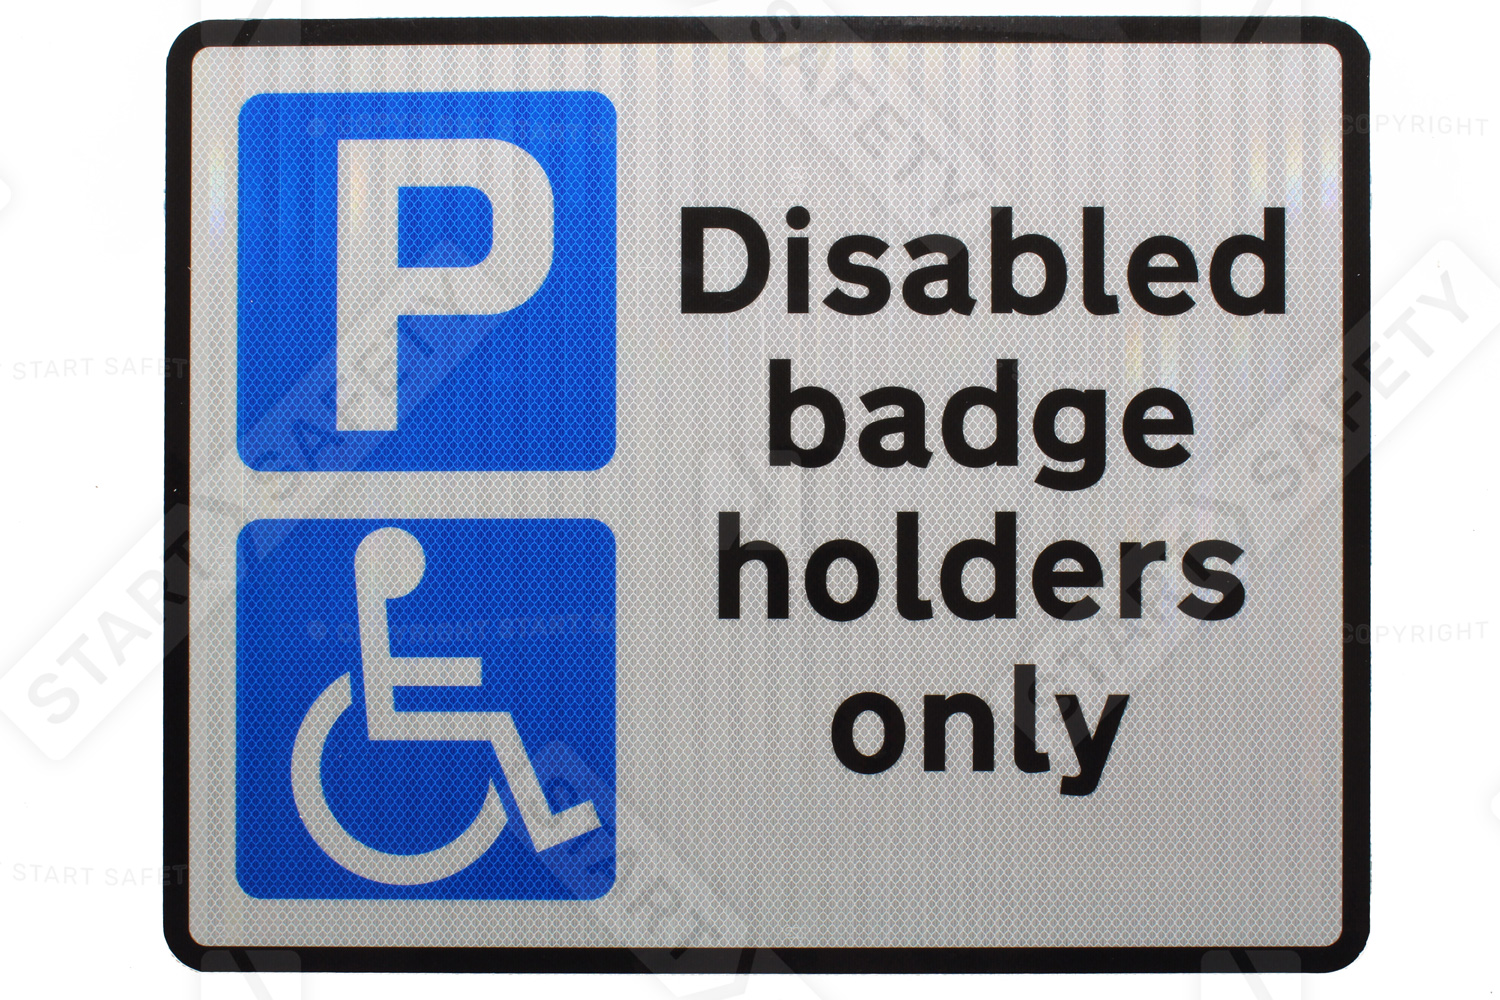 Disabled badge holders only information sign